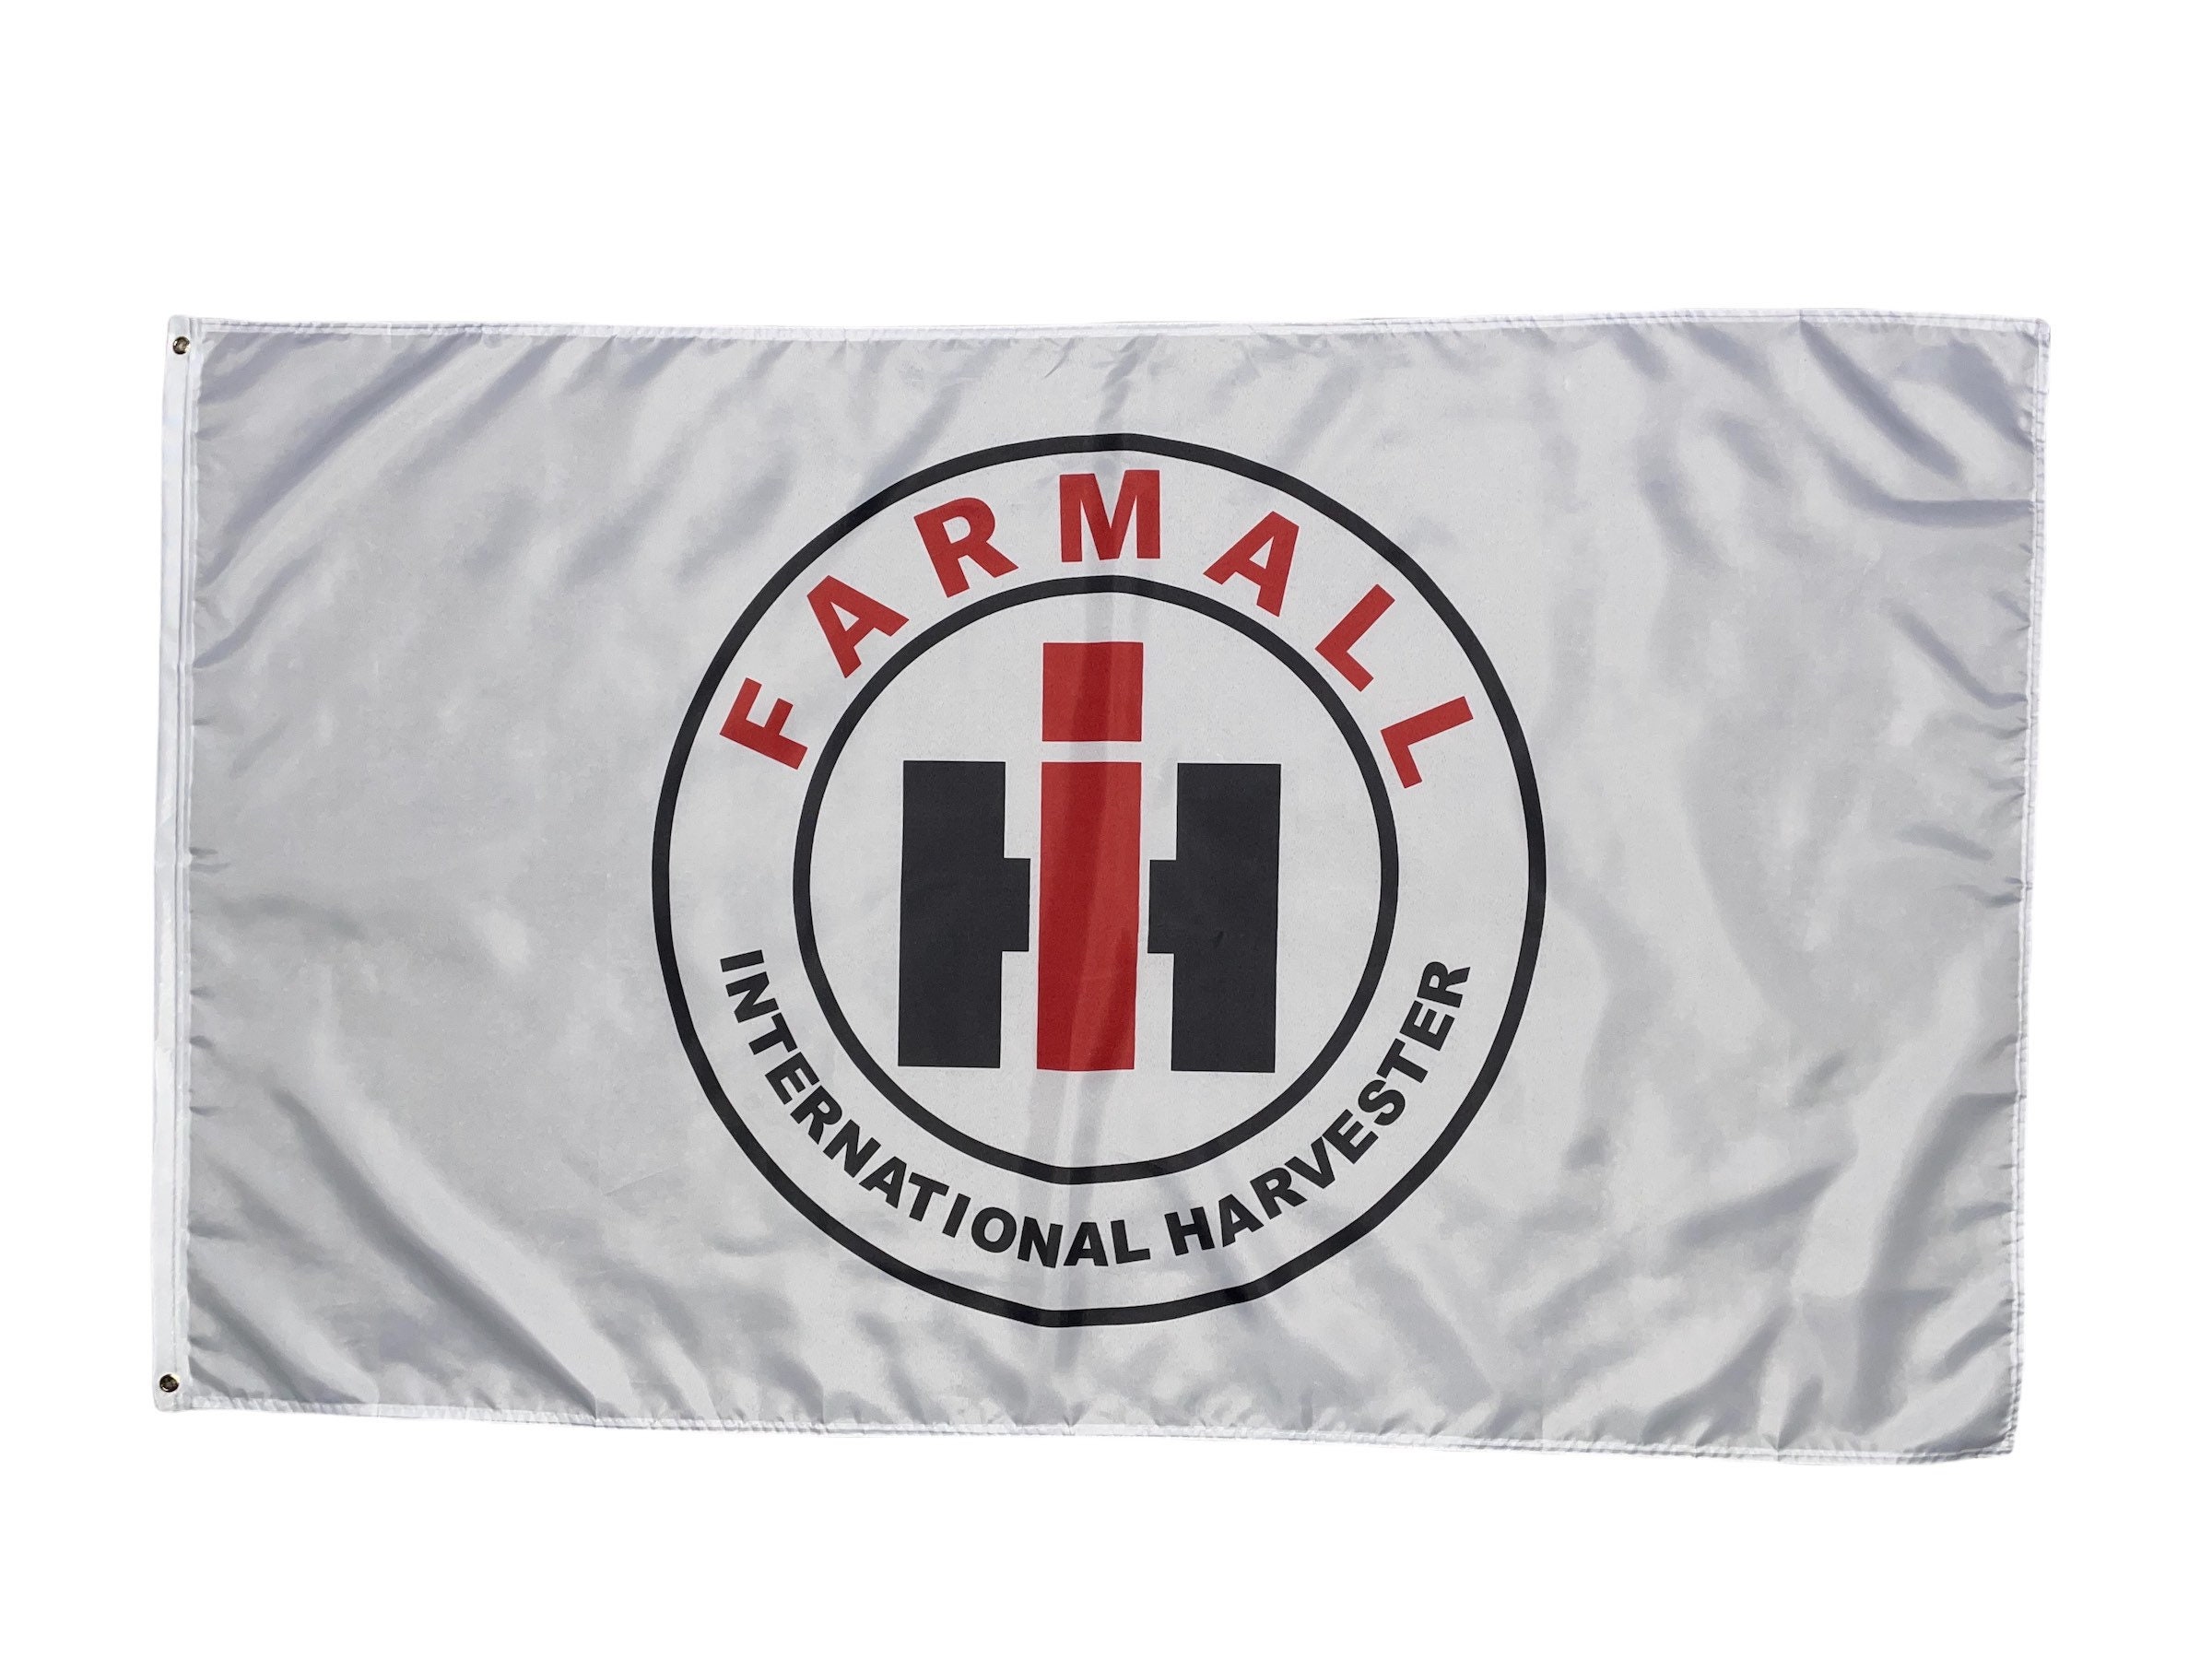 3ft x 5ft Free Shipping Farmall International Harvester Flag